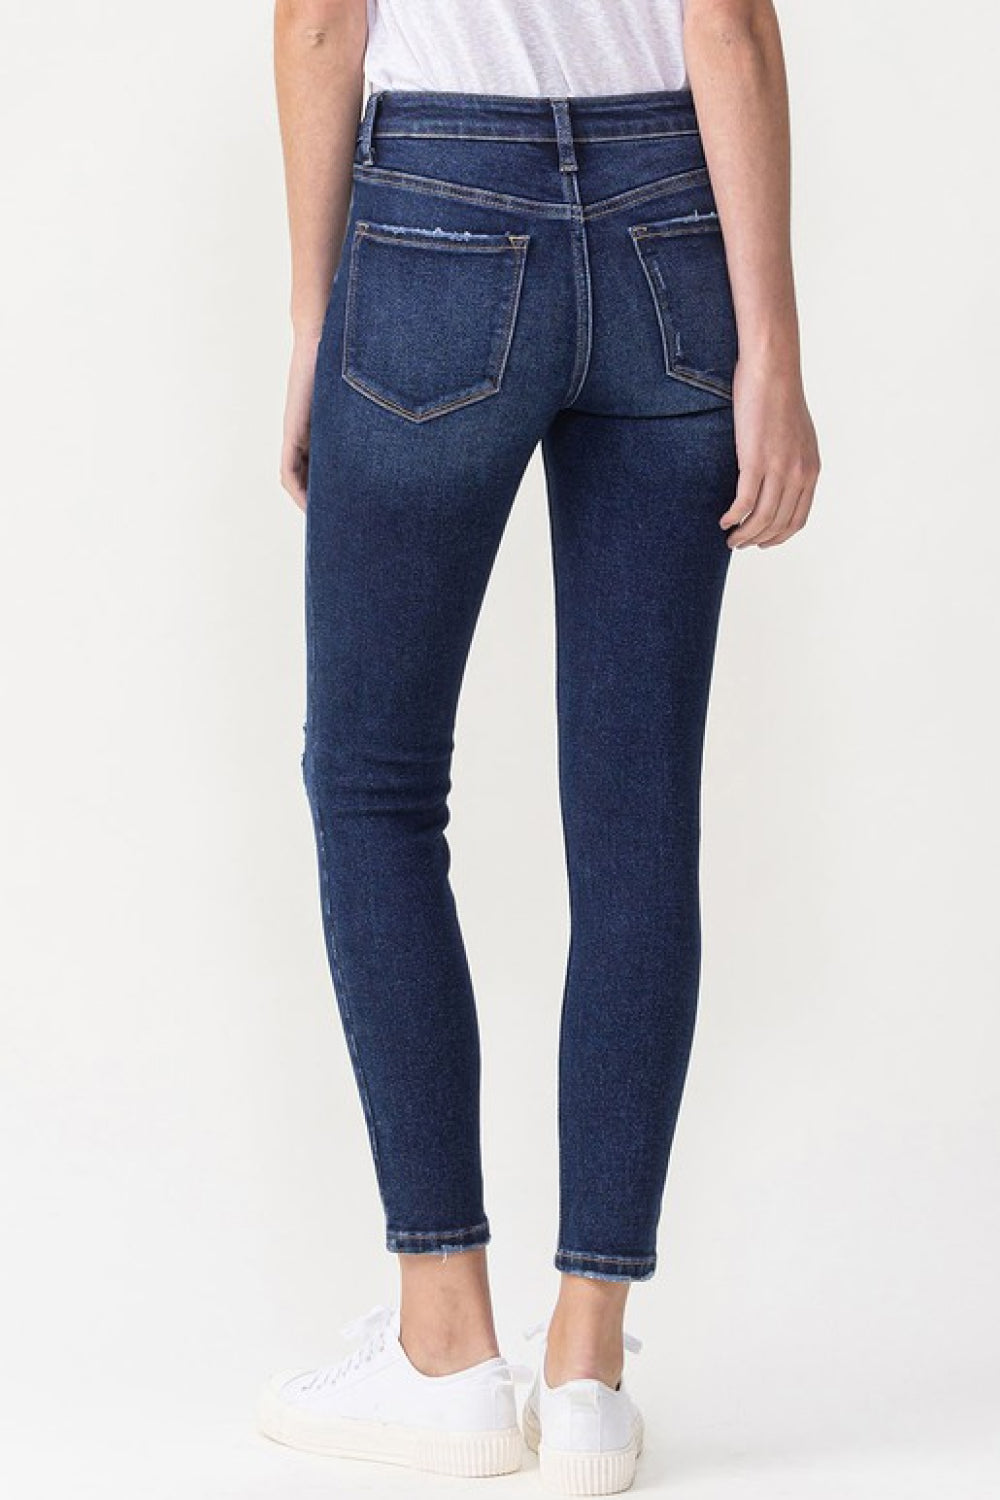 Lovervet Full Size Chelsea Midrise Crop Skinny Jeans - DromedarShop.com Online Boutique